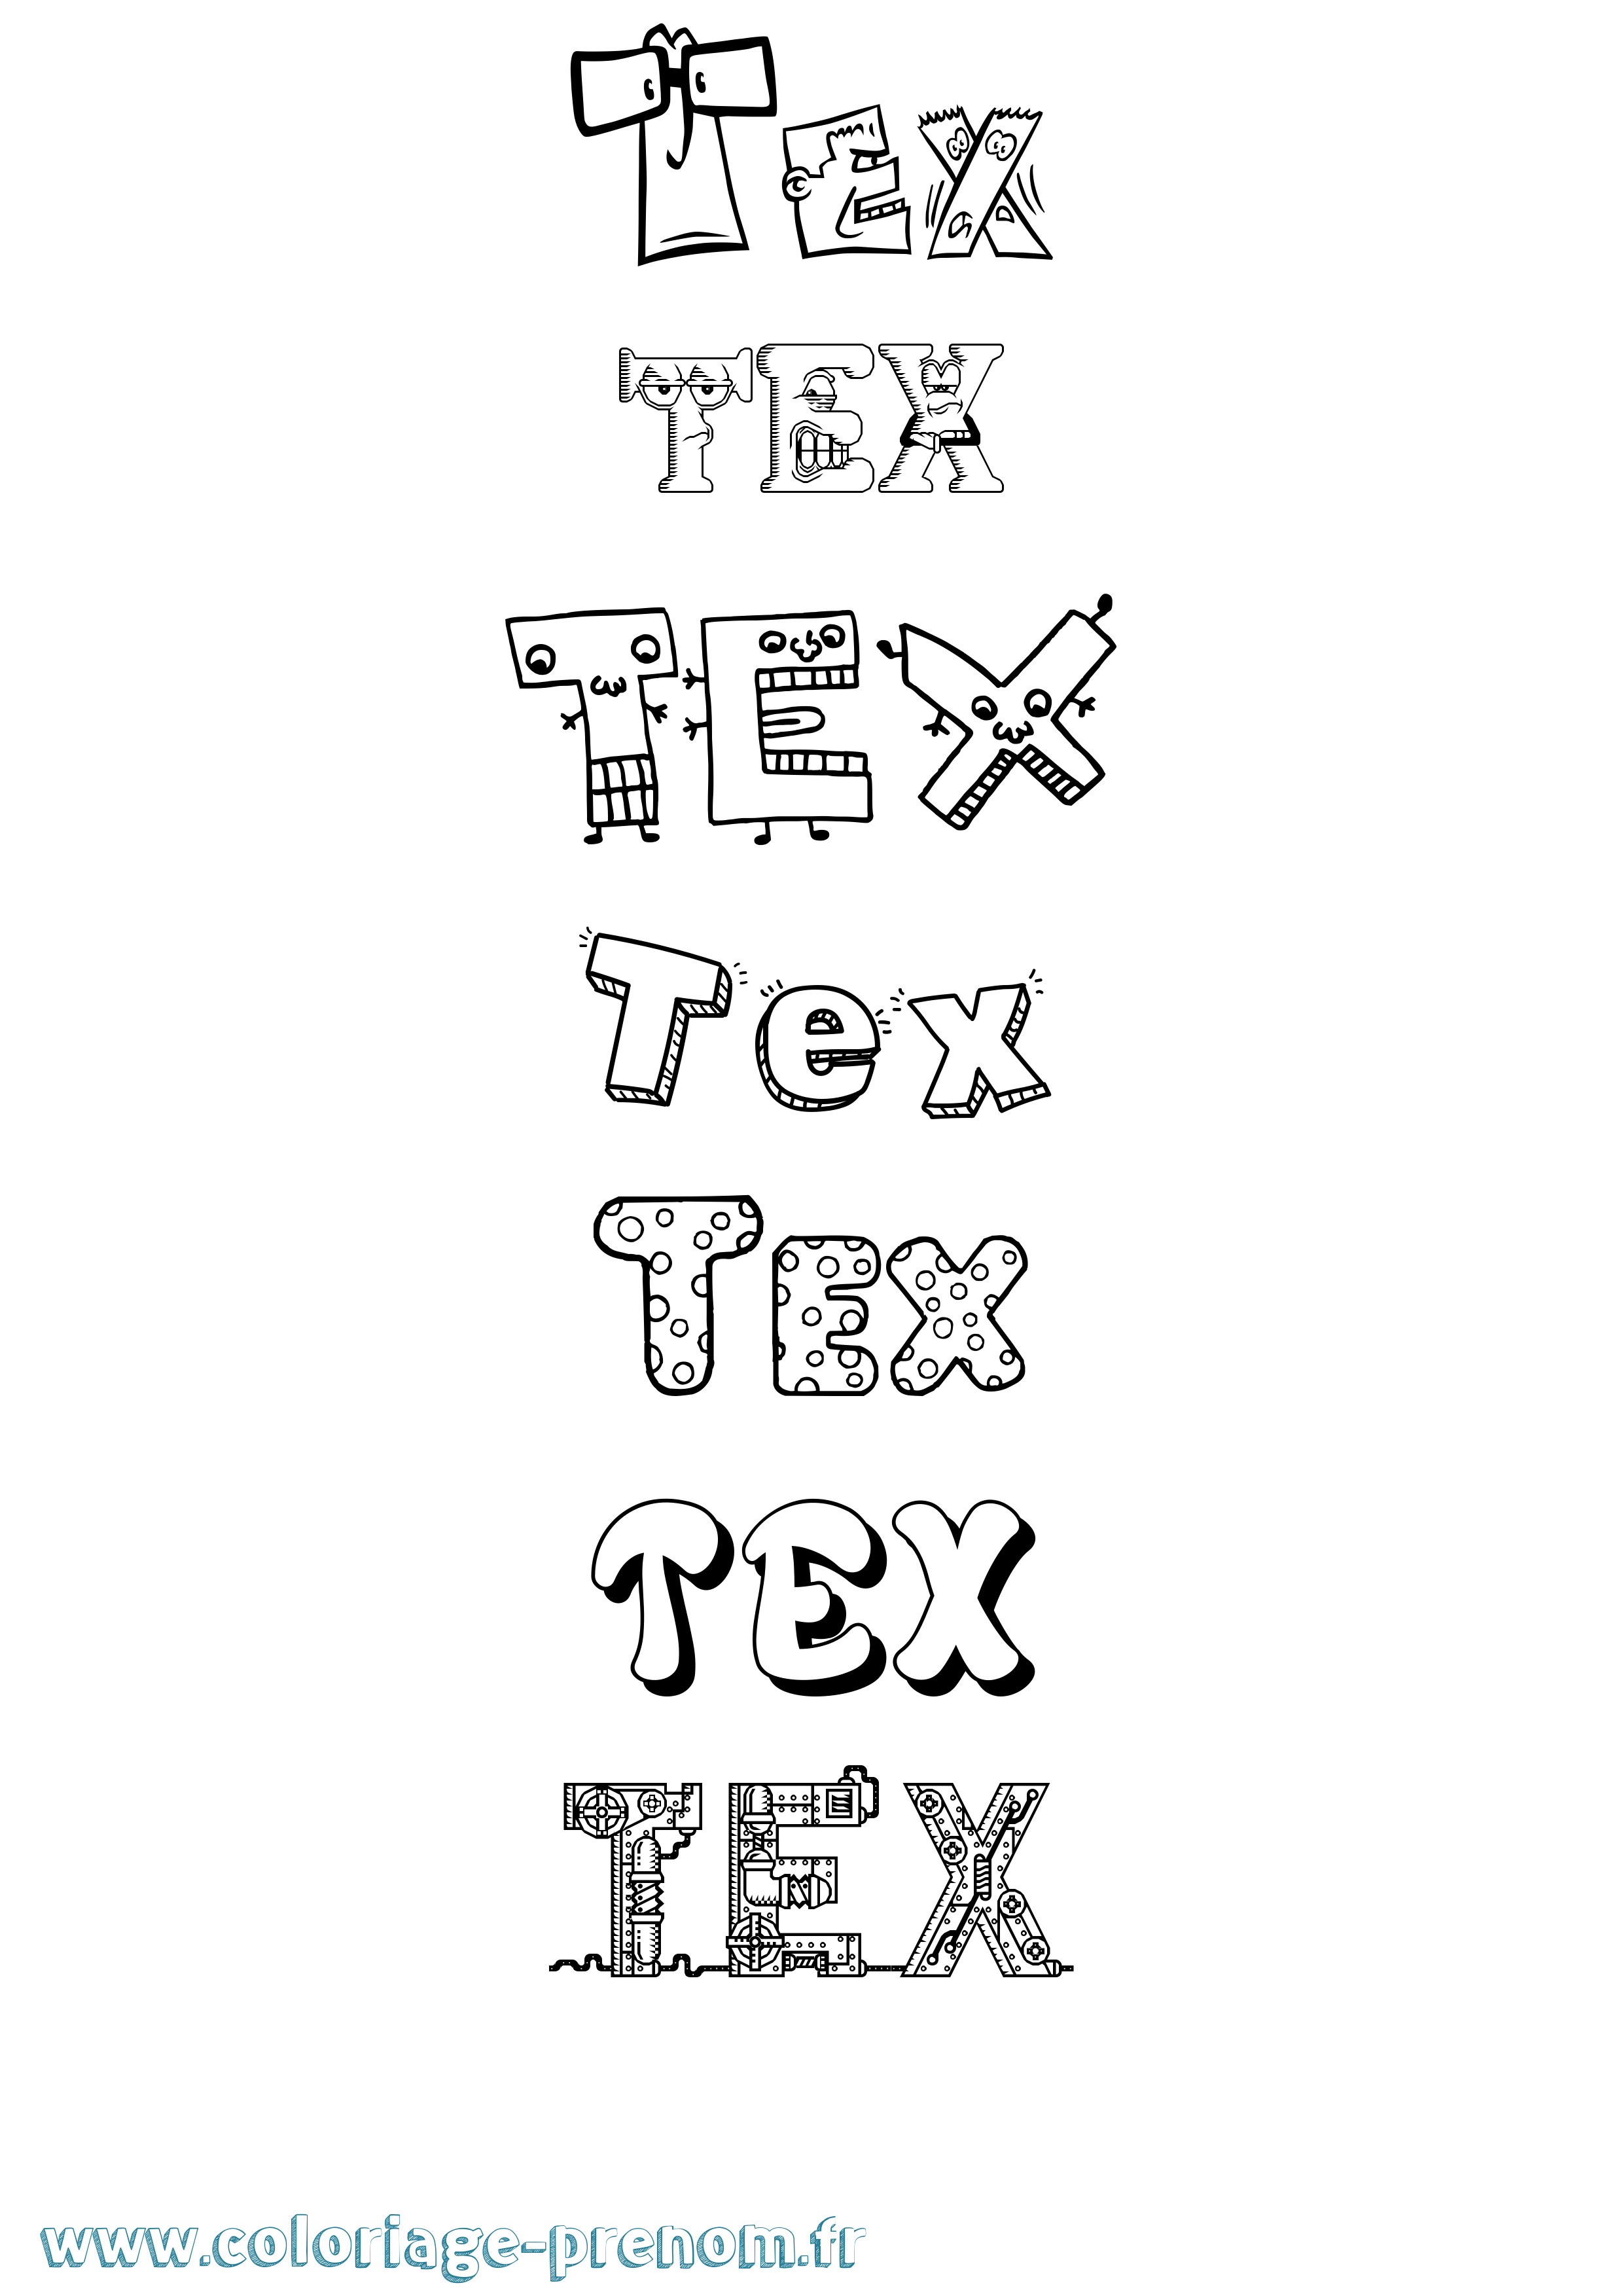 Coloriage prénom Tex Fun